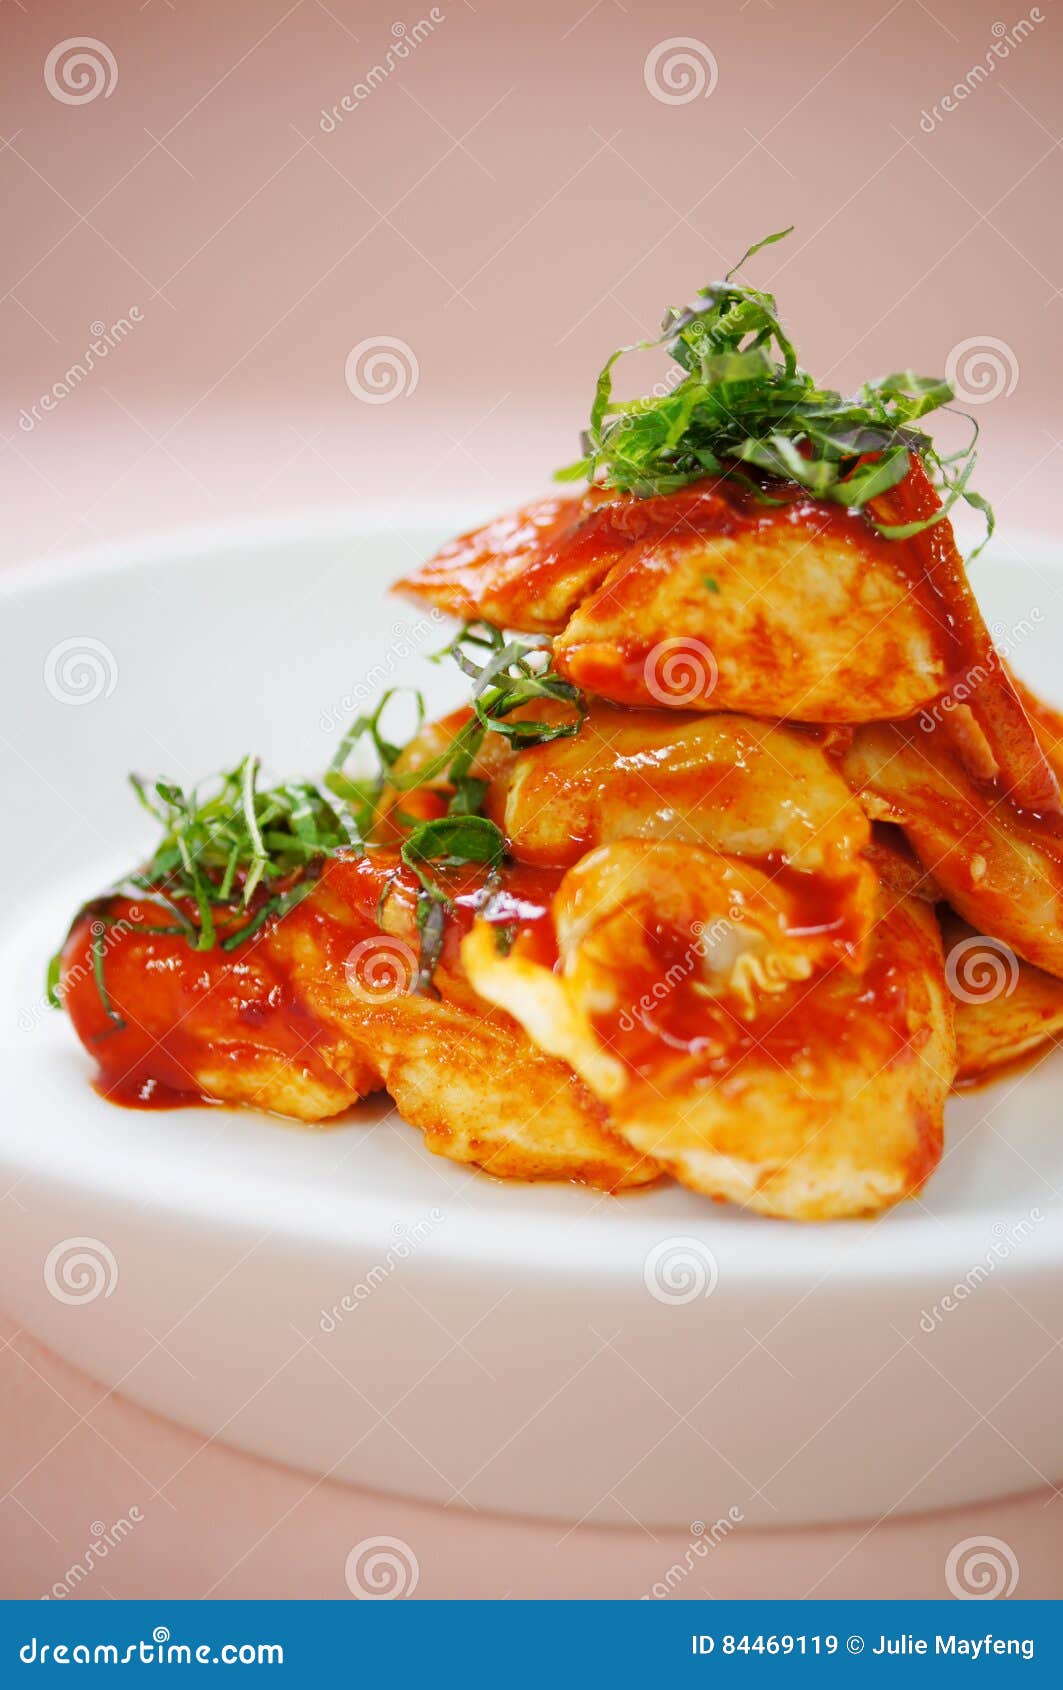 Spicy Stir-Fried Chicken Dak Galbi Stock Image - Image of healthy ...